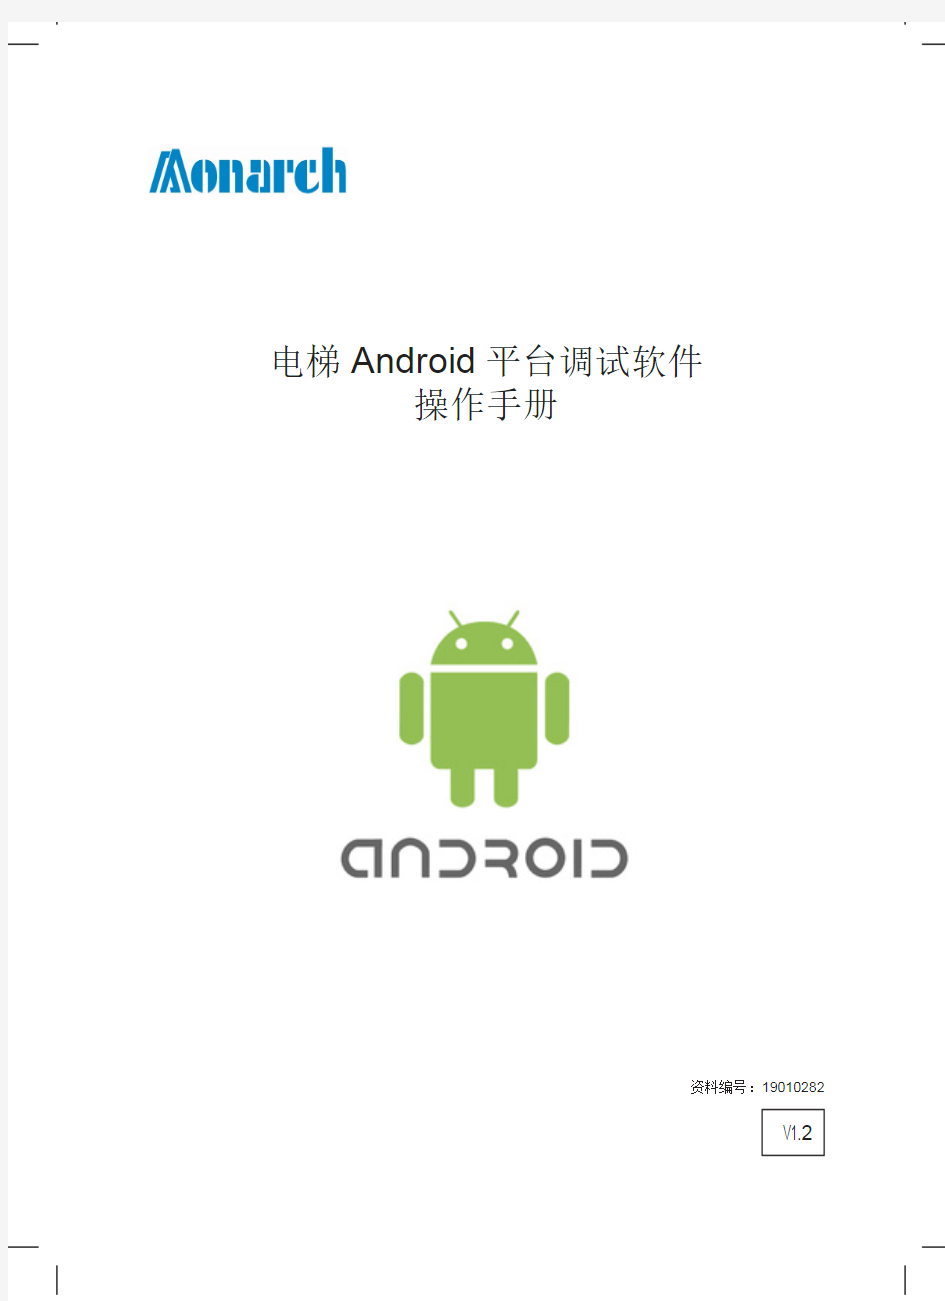 默纳克Android调试软件手册1.2